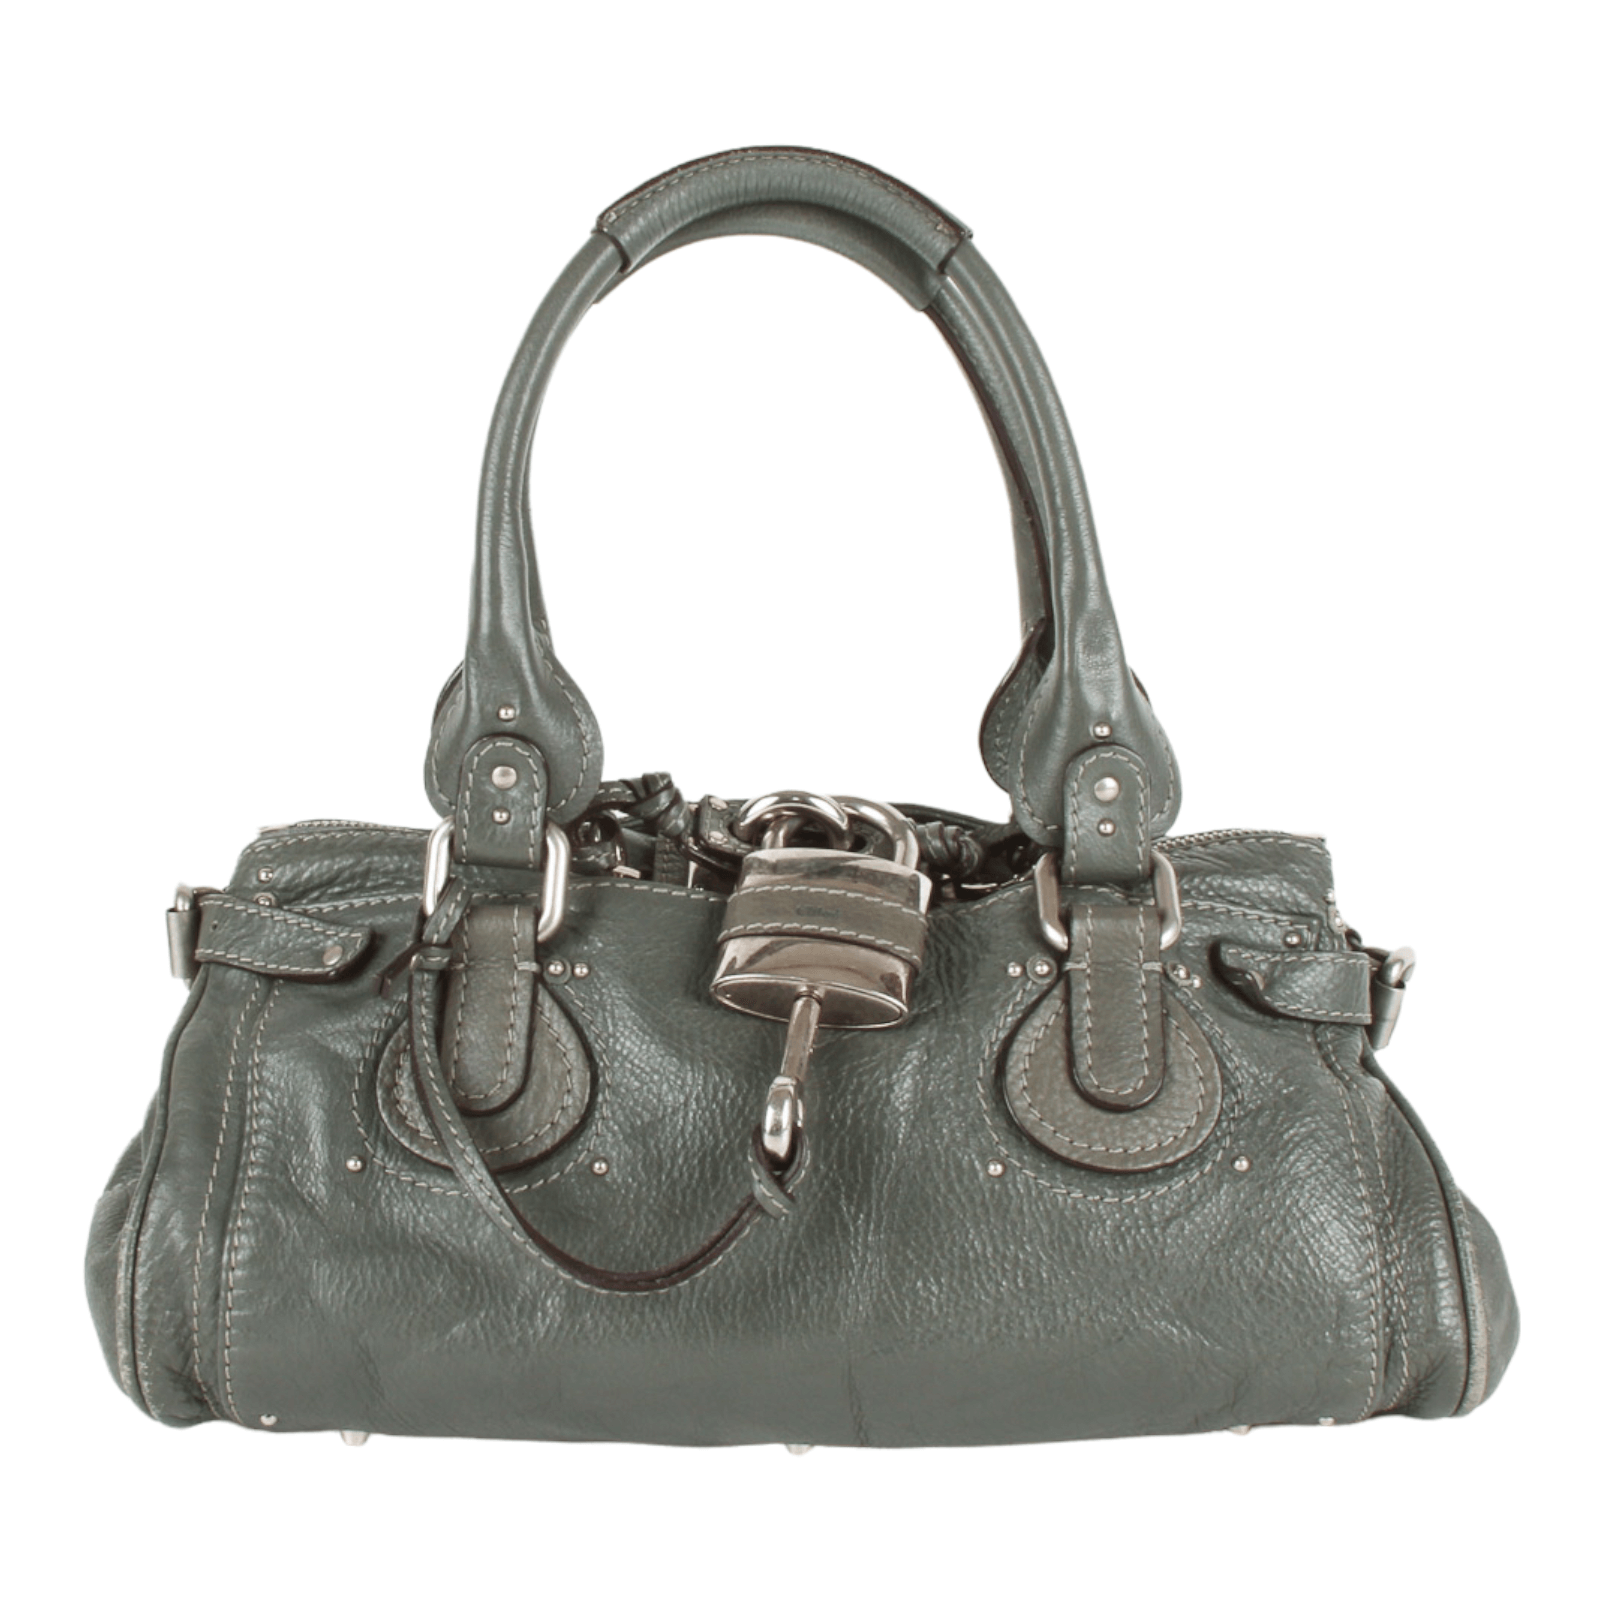 Authentic Chloe grey leather Paddington Satchel Shoulder/Hand bag